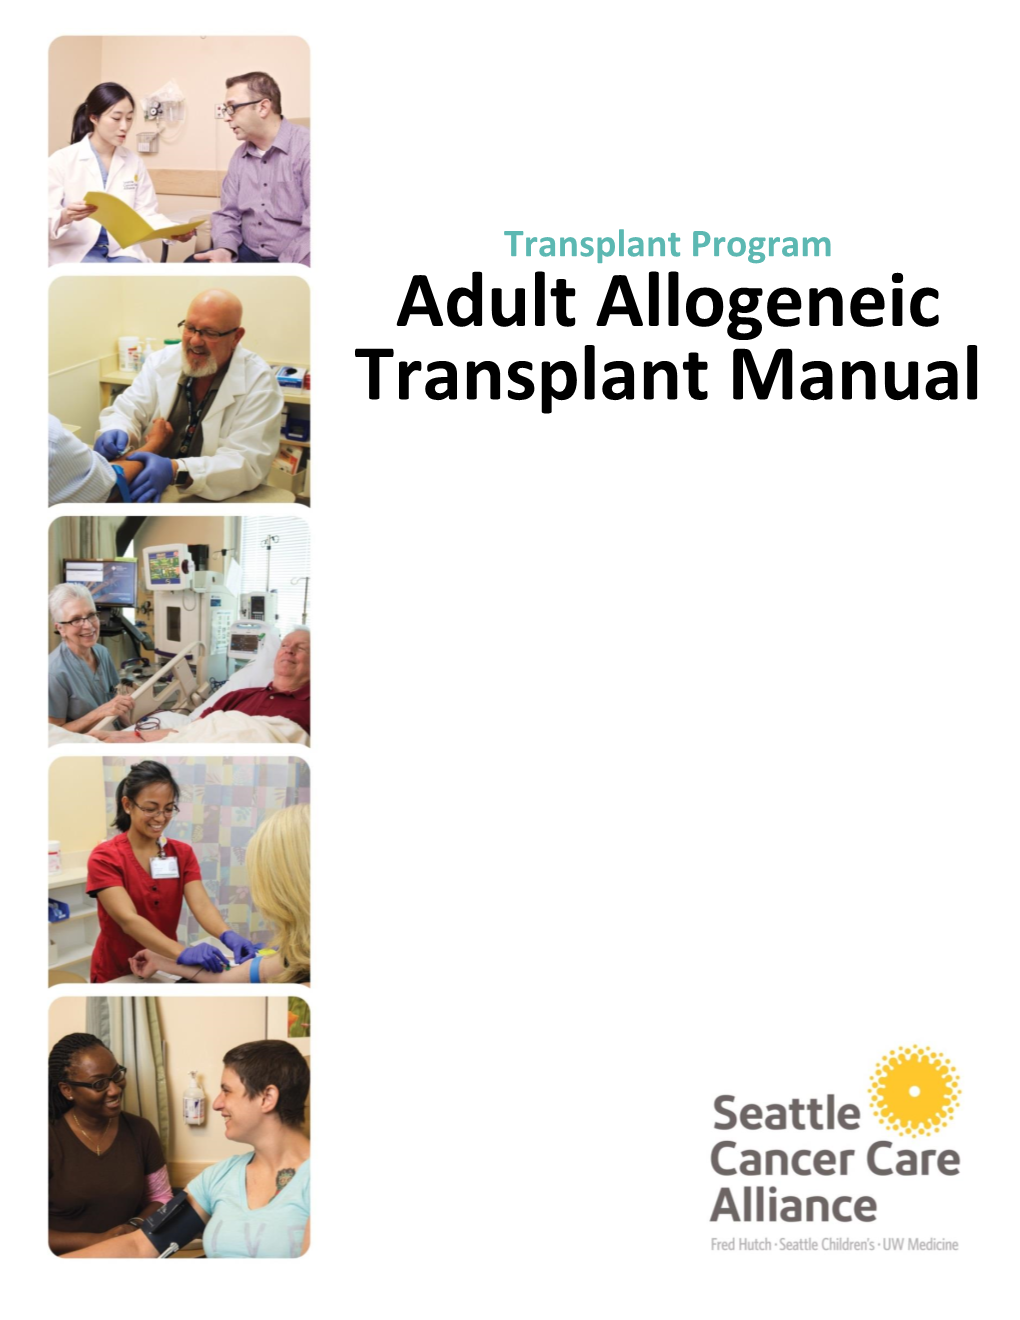 Adult Allogeneic Transplant Manual